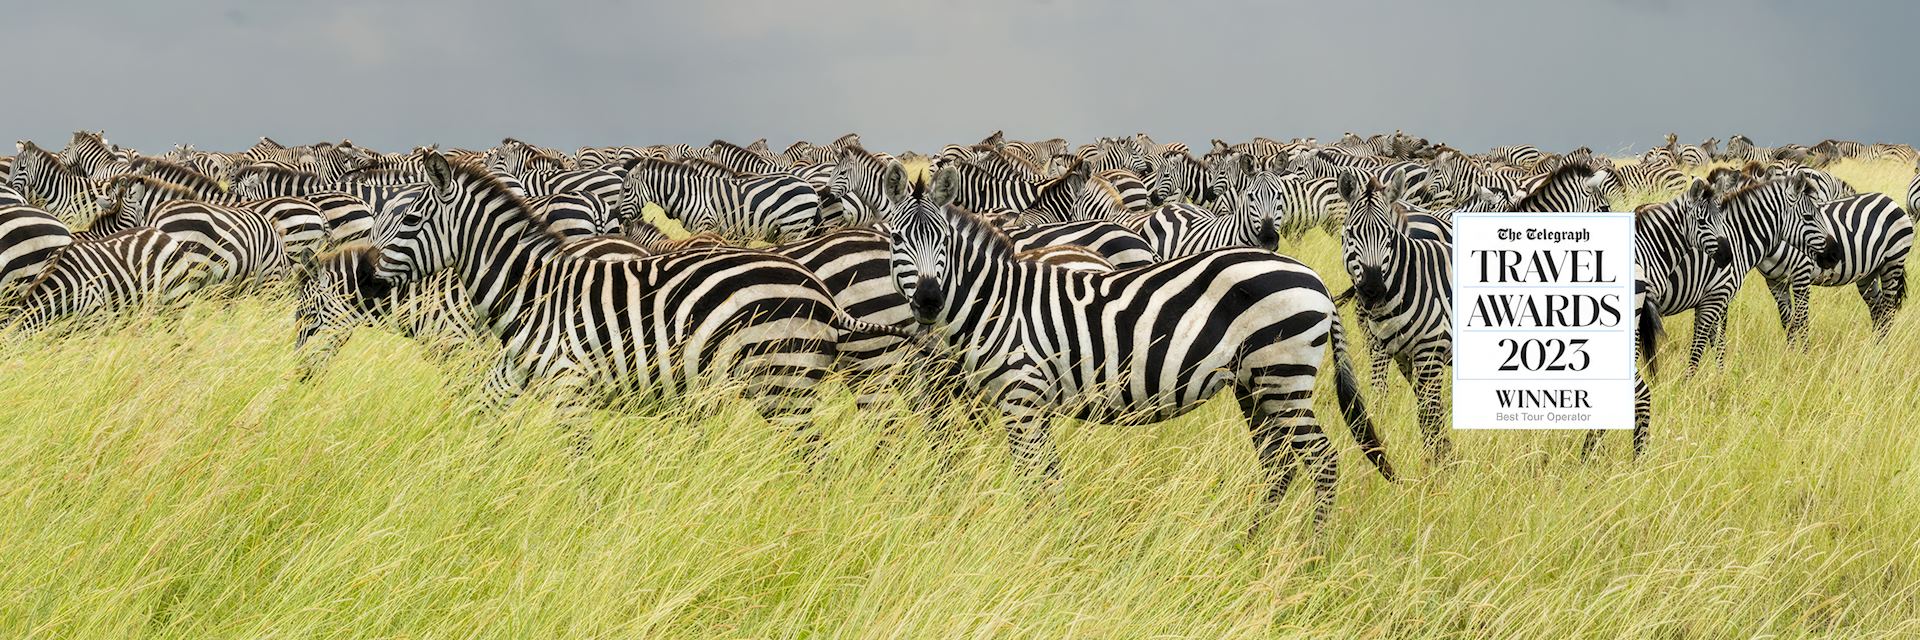 Telegraph Travel Awards Logo on image of zebra in the Serengeti